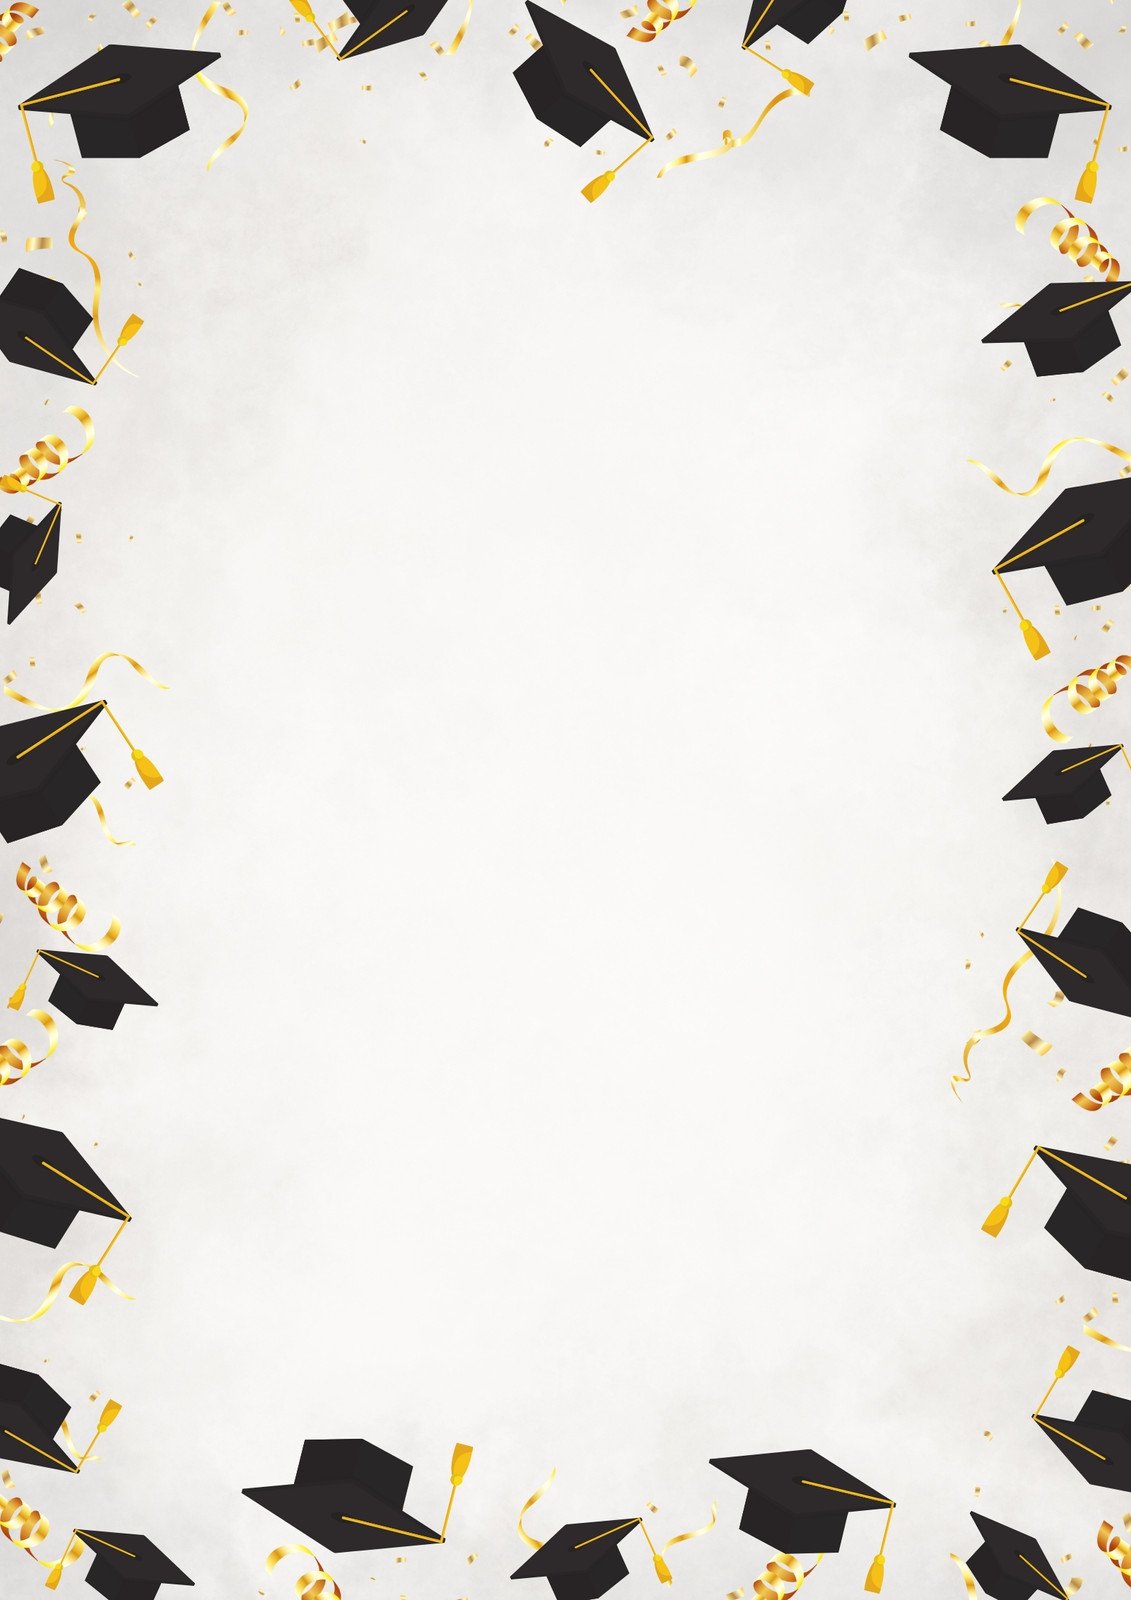 Black Gold Decorative Graduation Frame Page Border